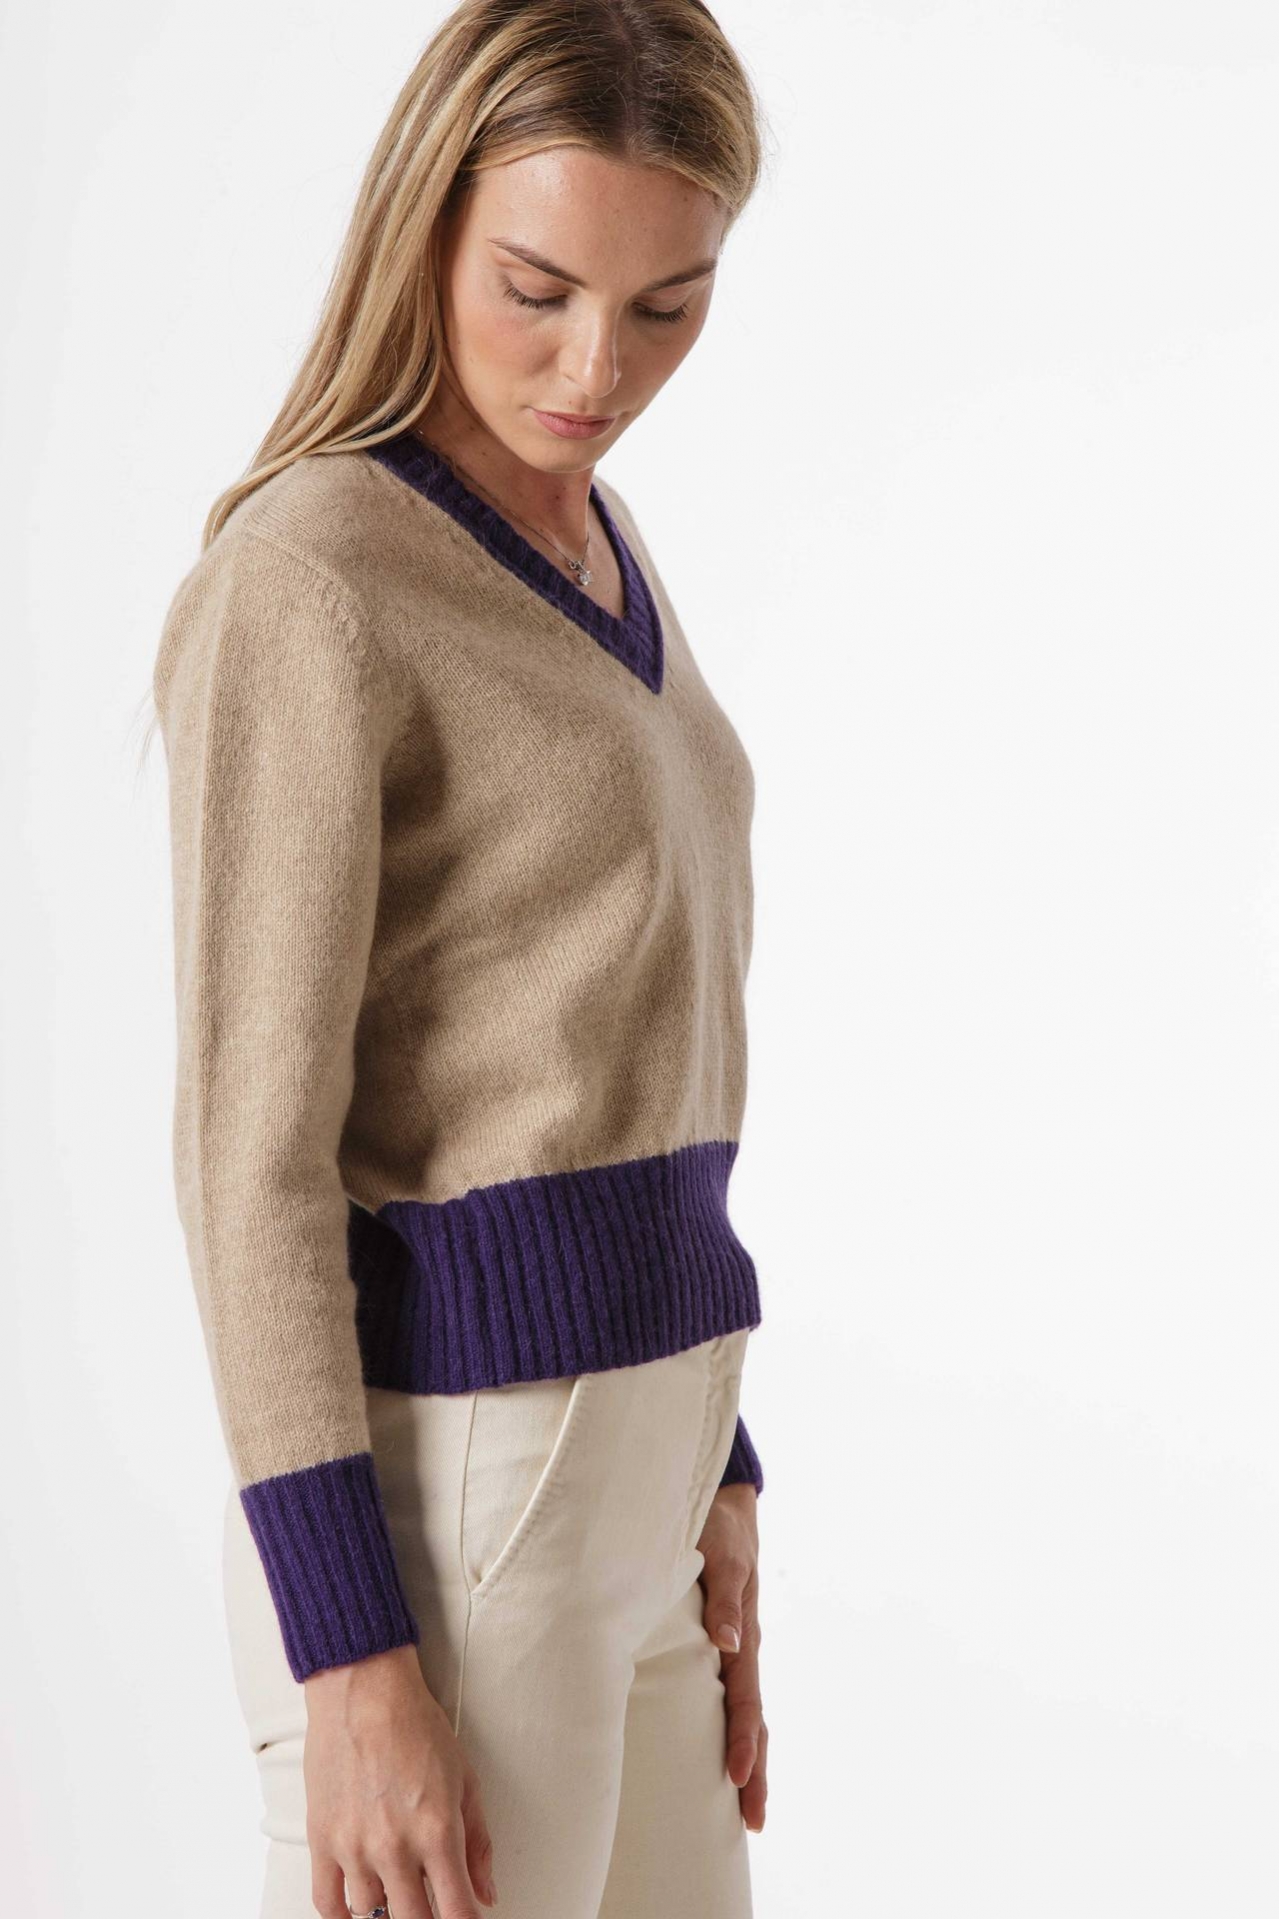 Two-tone sweater